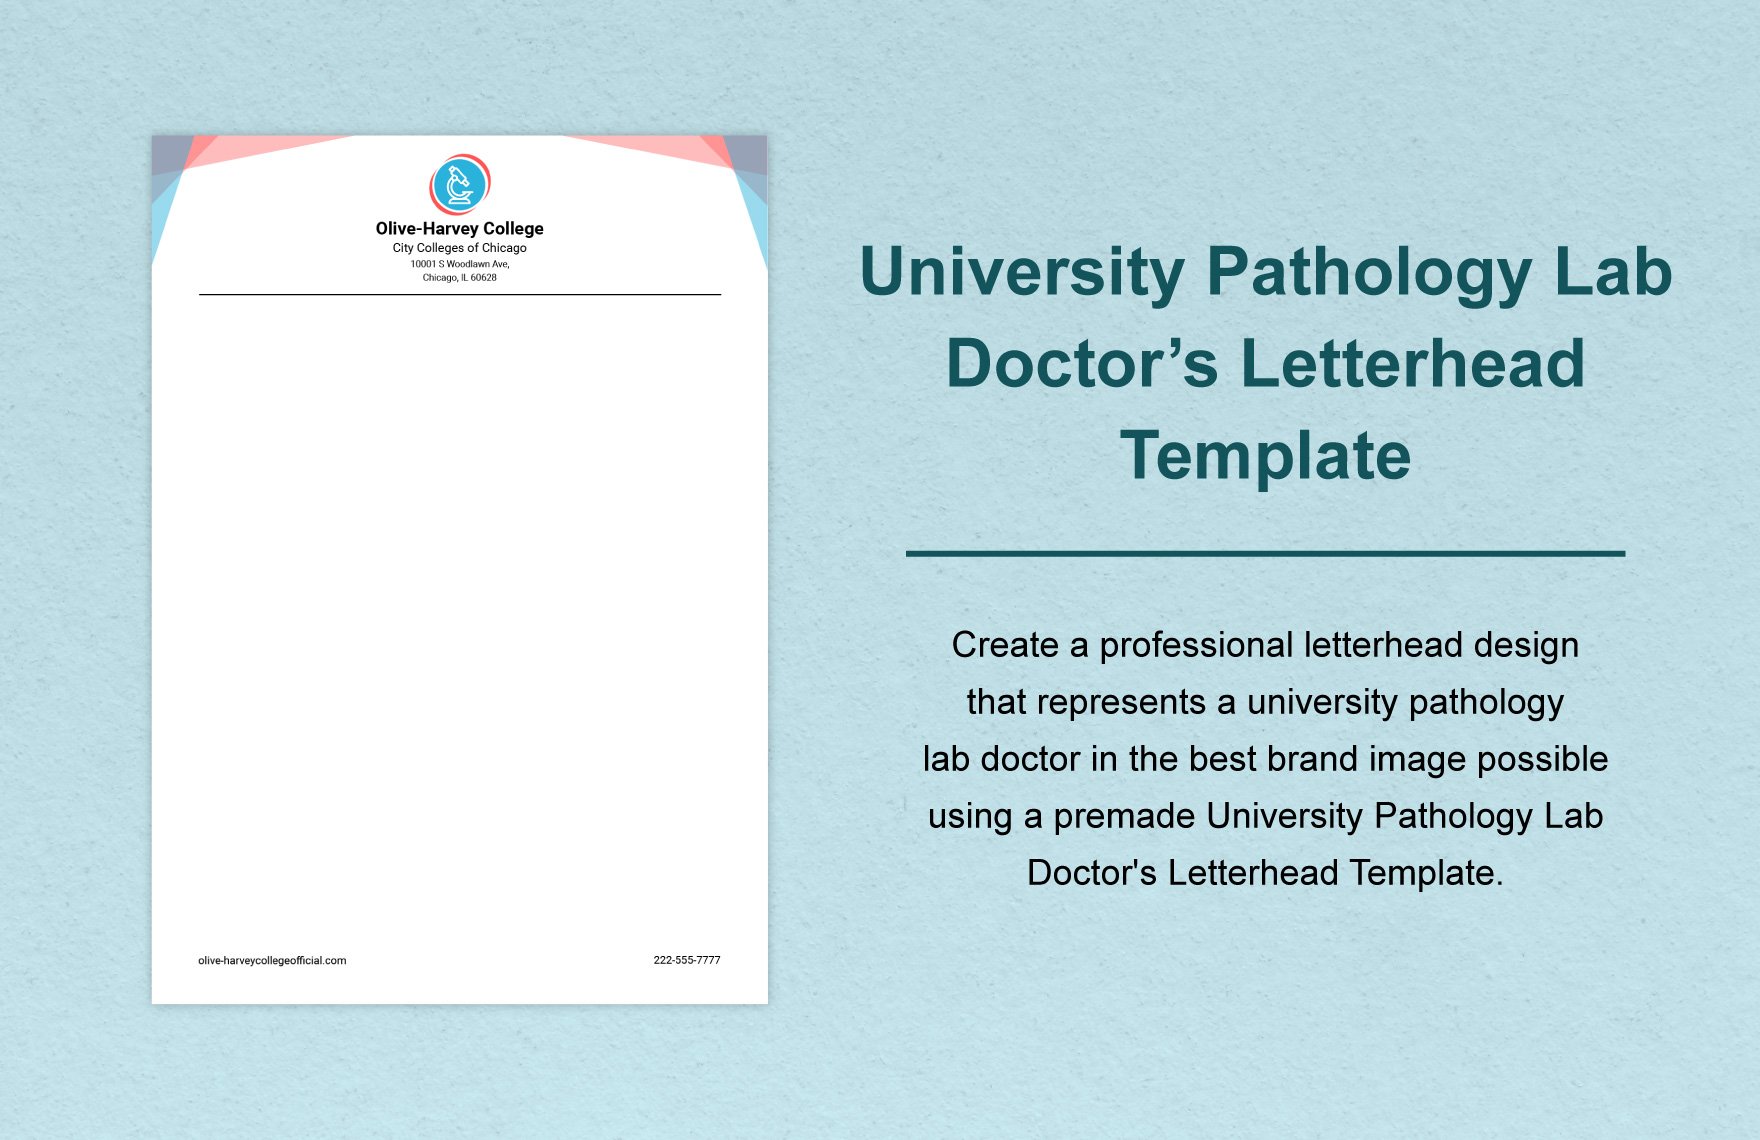 University Pathology Lab Doctor’s Letterhead Template